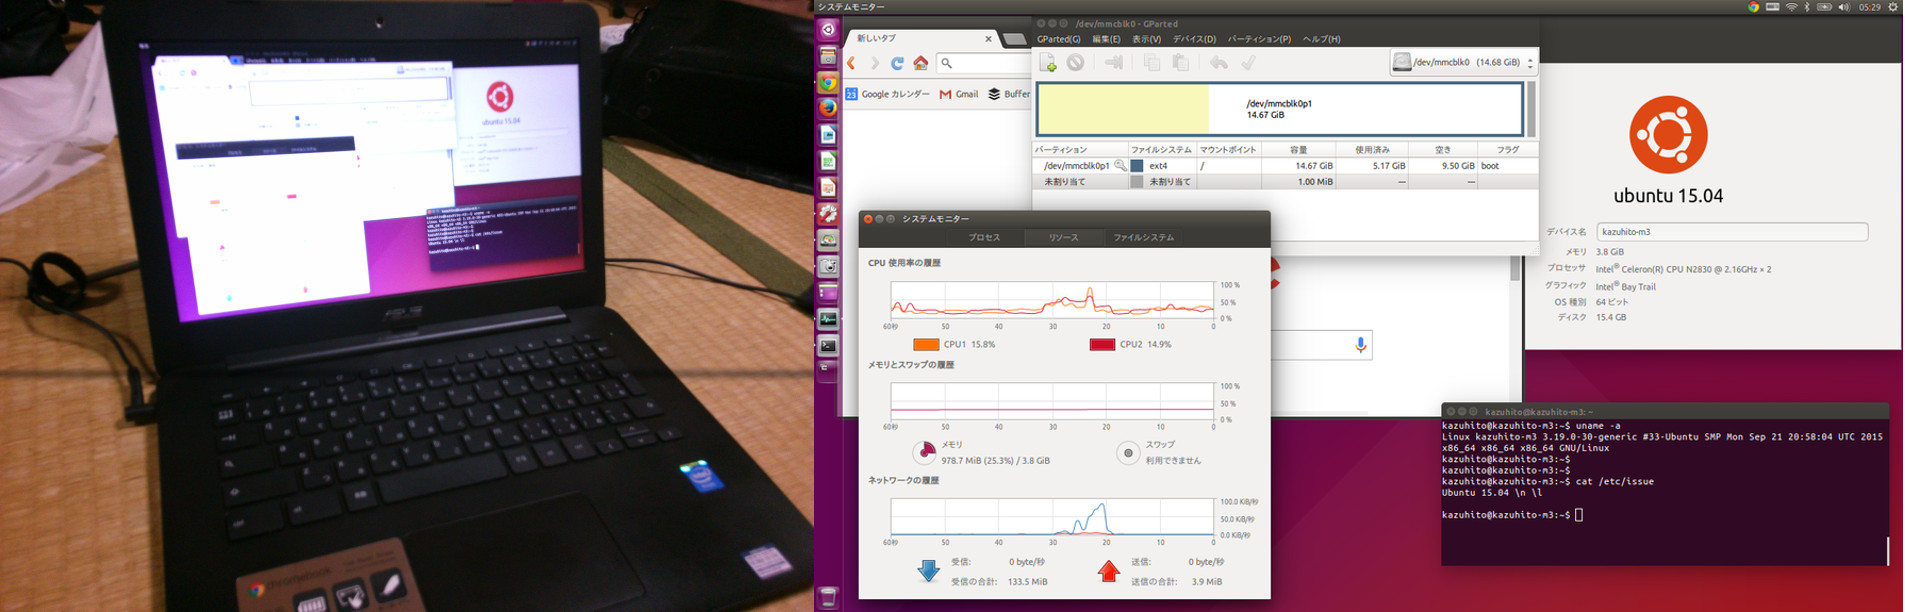 Nbm2 Chromebock Asus C300ma に 生のos Ubuntulinux を入れる方法